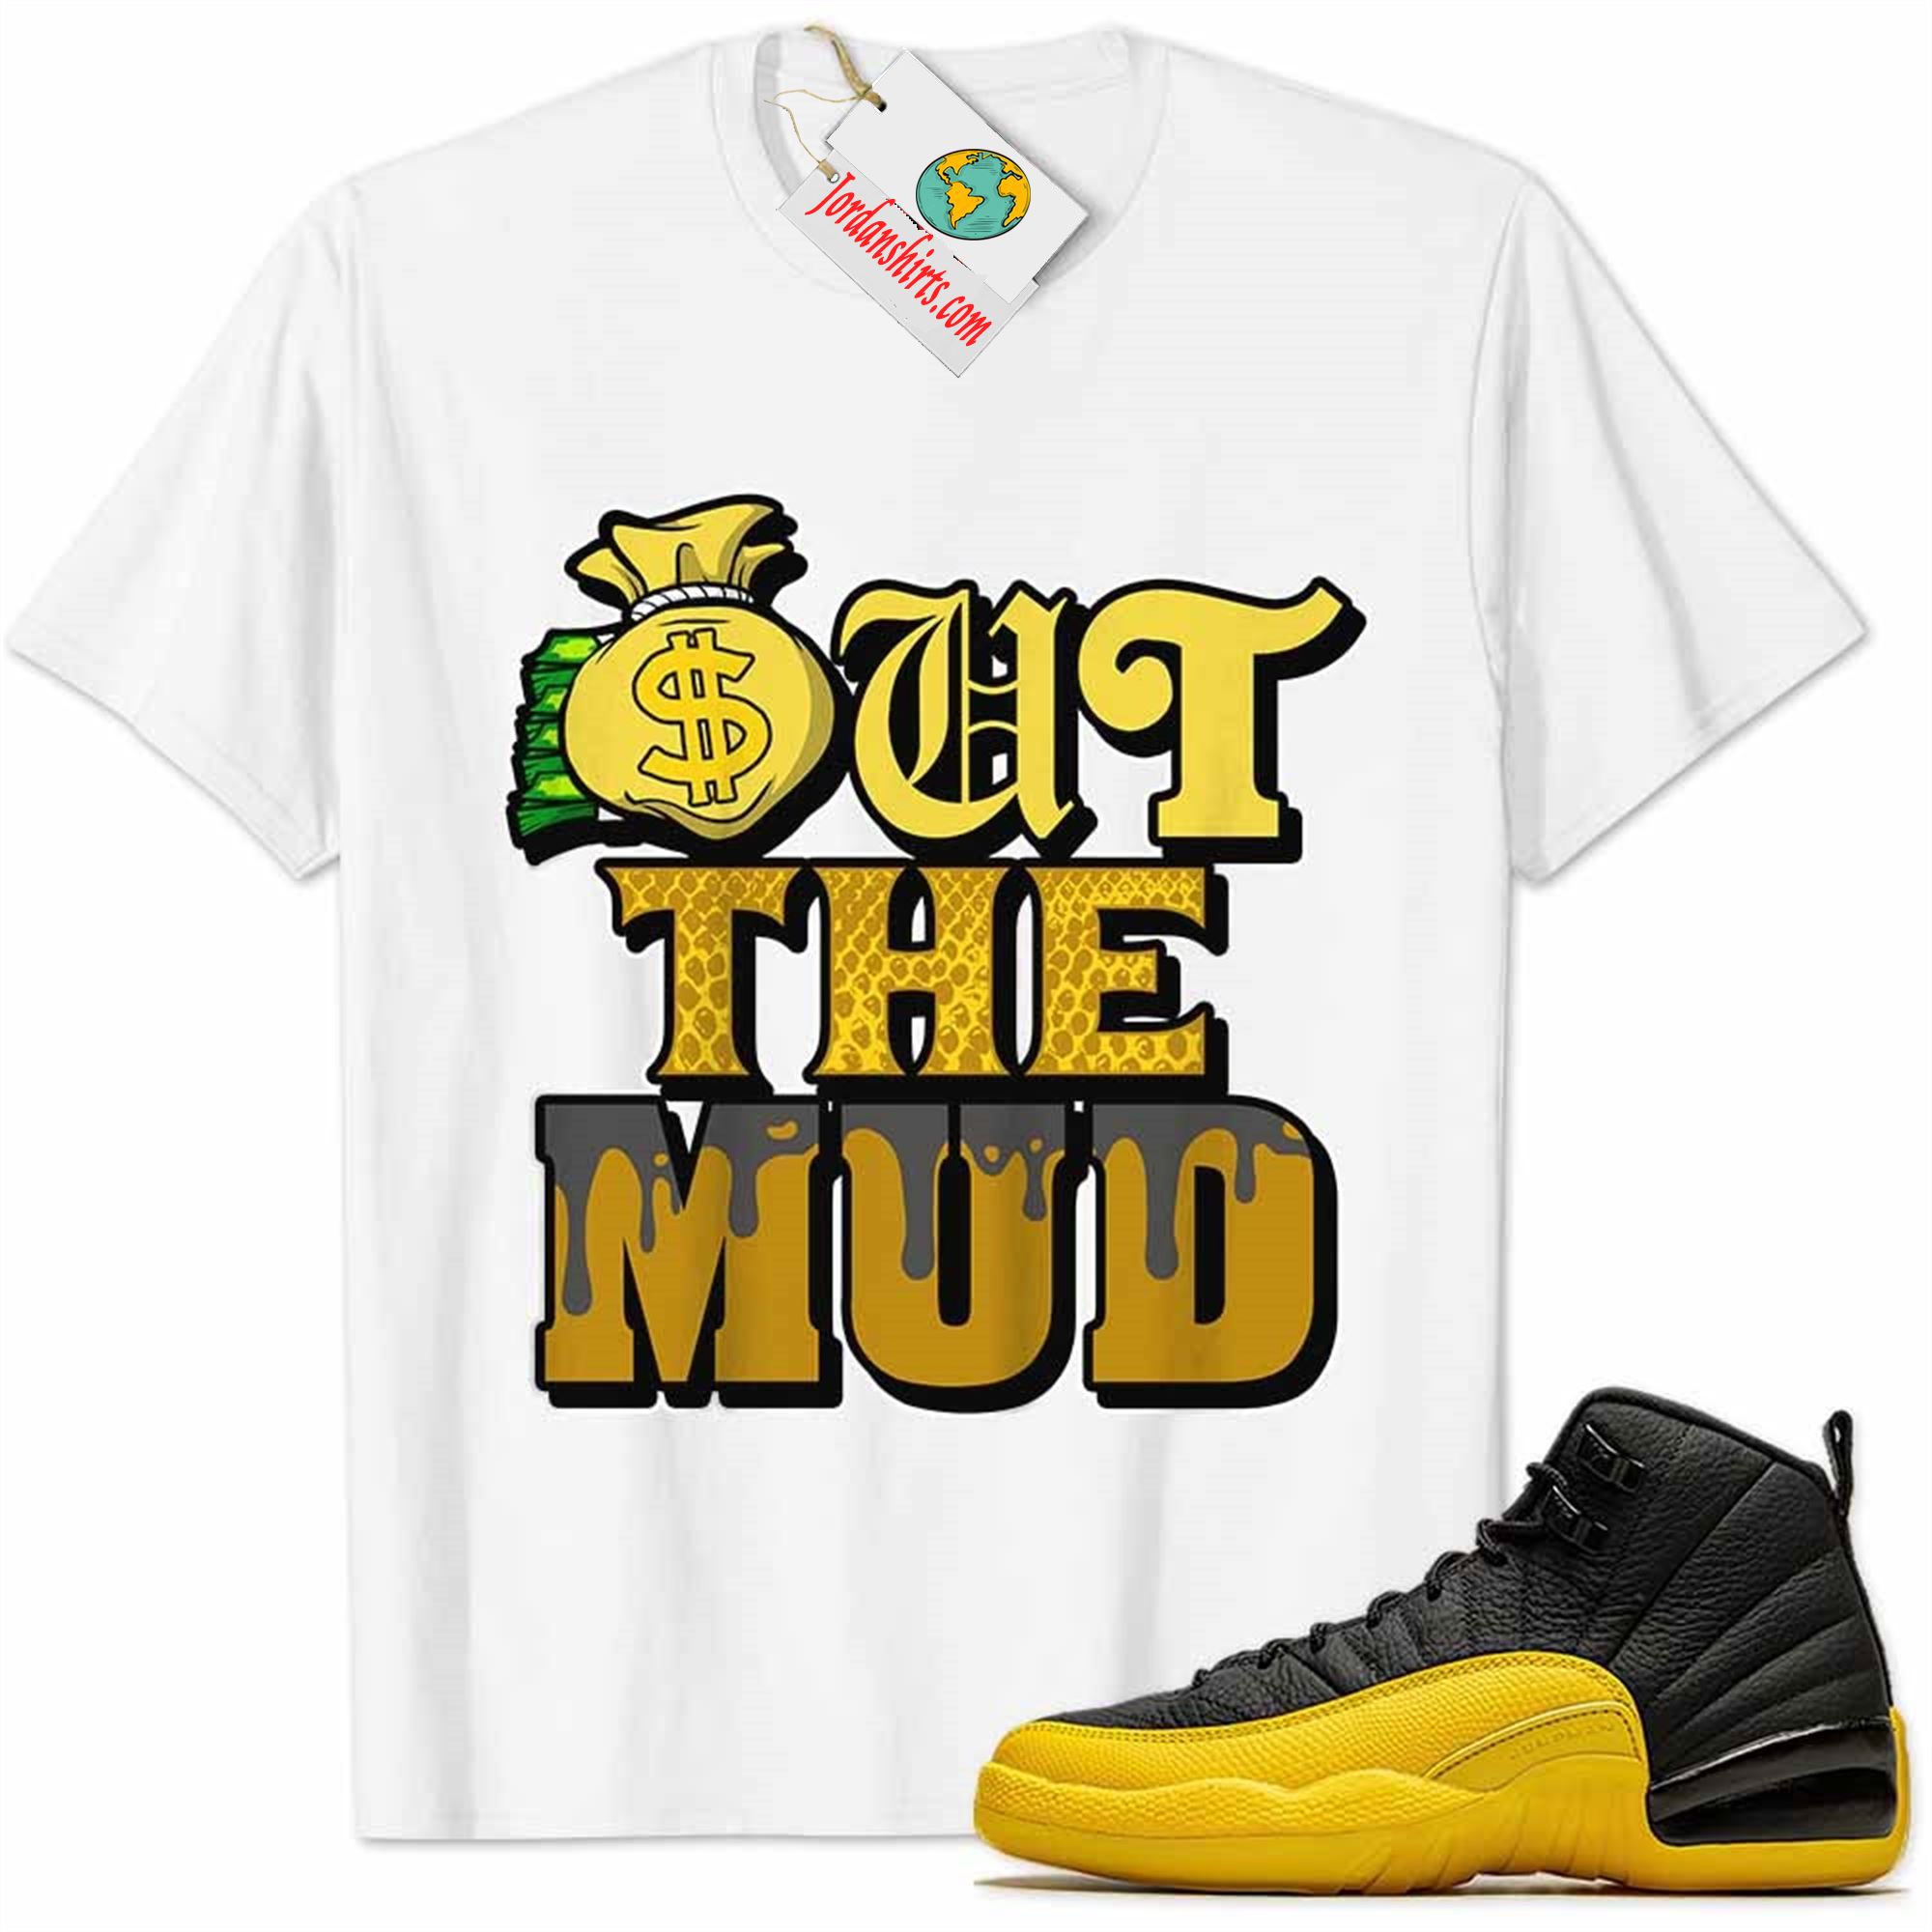 Jordan 12 Shirt, Jordan 12 University Gold Shirt Out The Mud Money Bag White Plus Size Up To 5xl